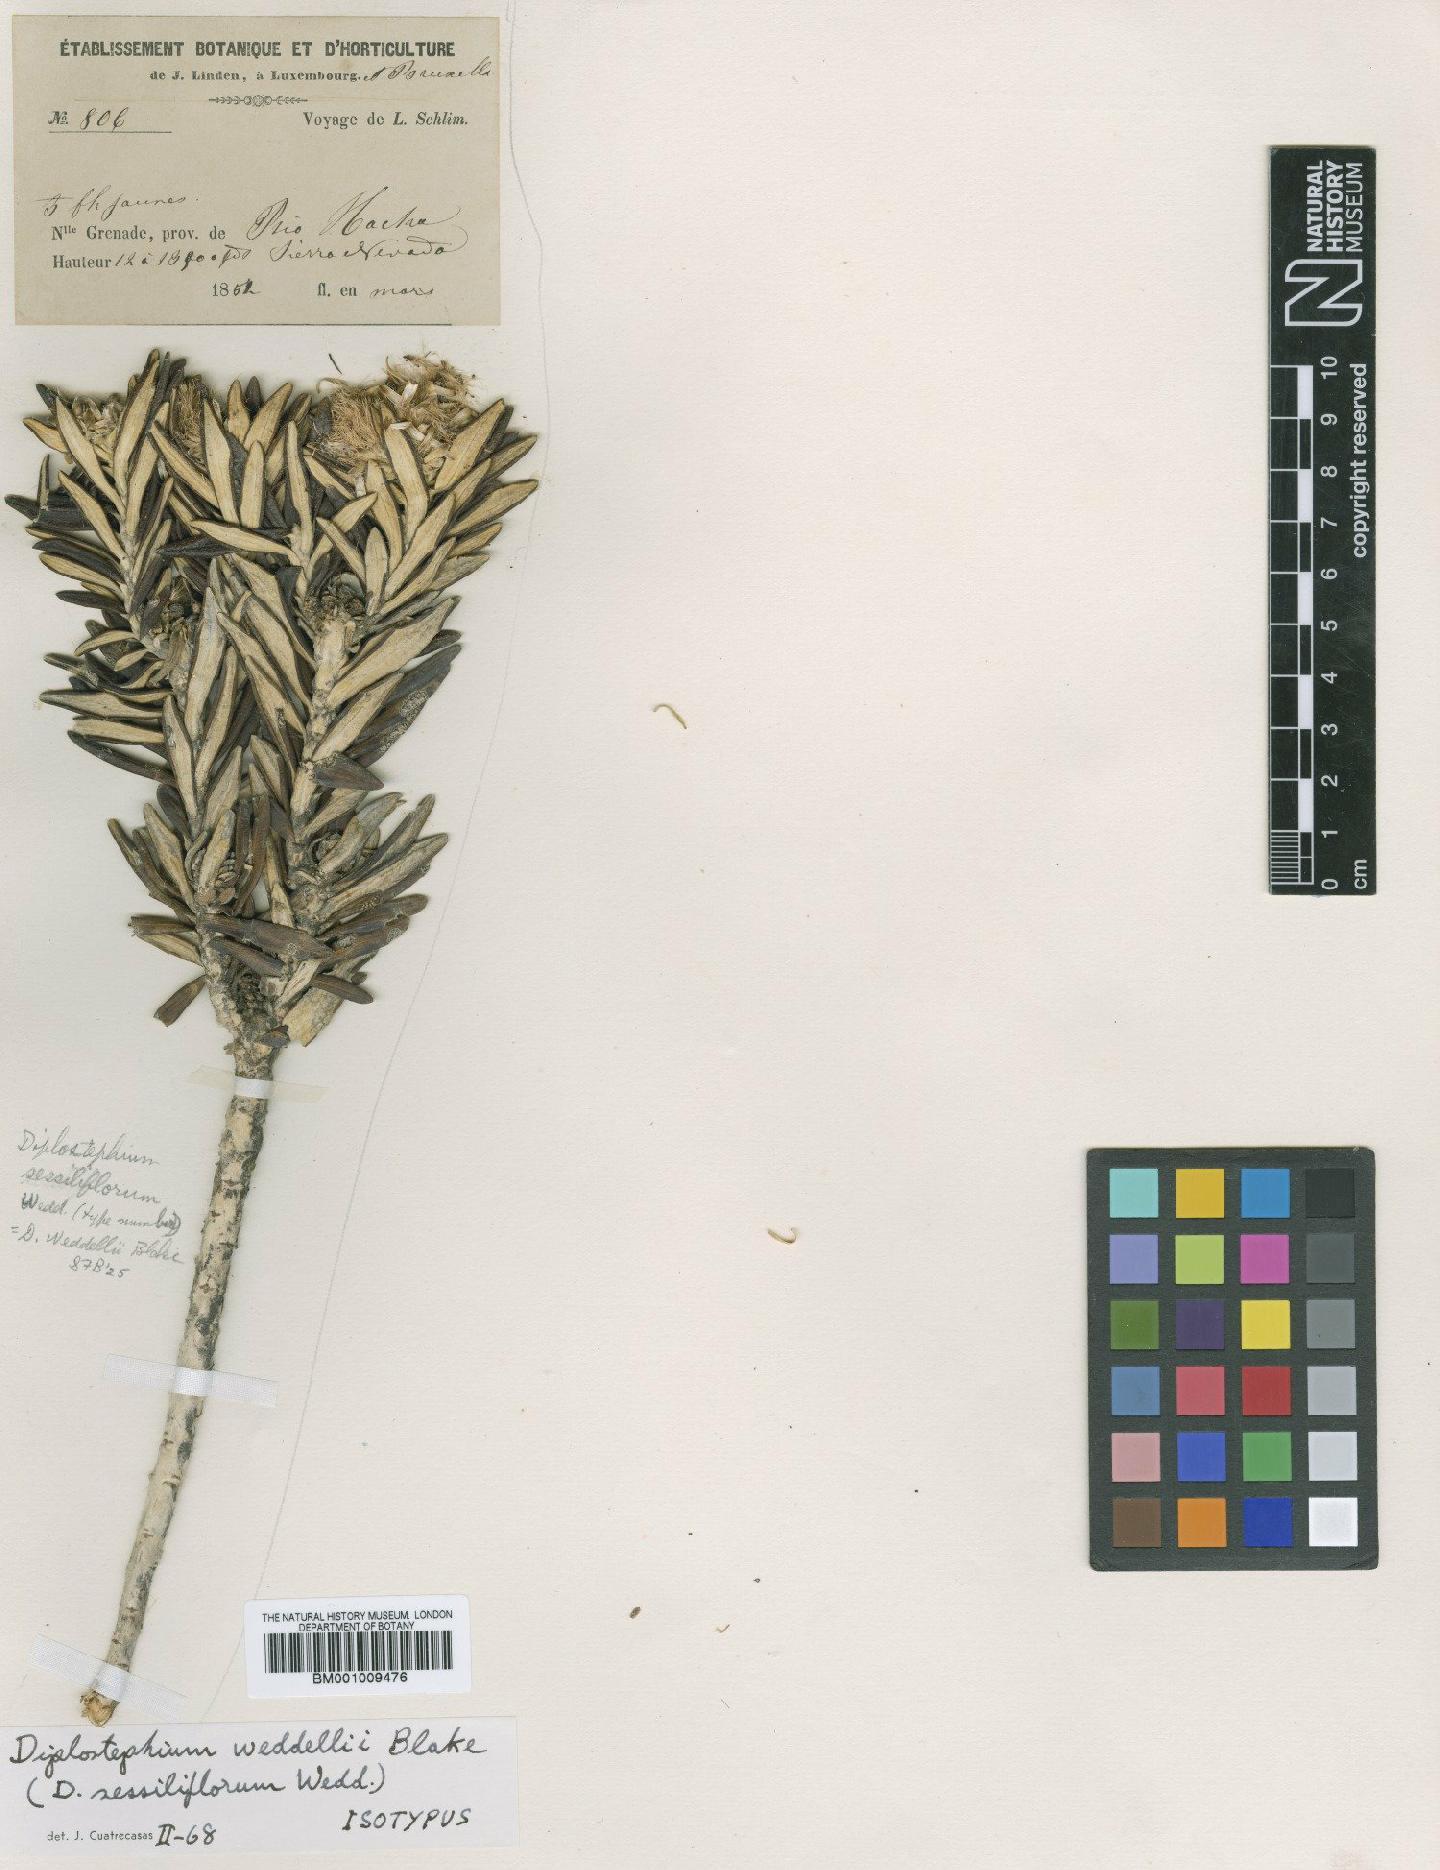 To NHMUK collection (Diplostephium weddellii S.F.Blake; Isotype; NHMUK:ecatalogue:611127)